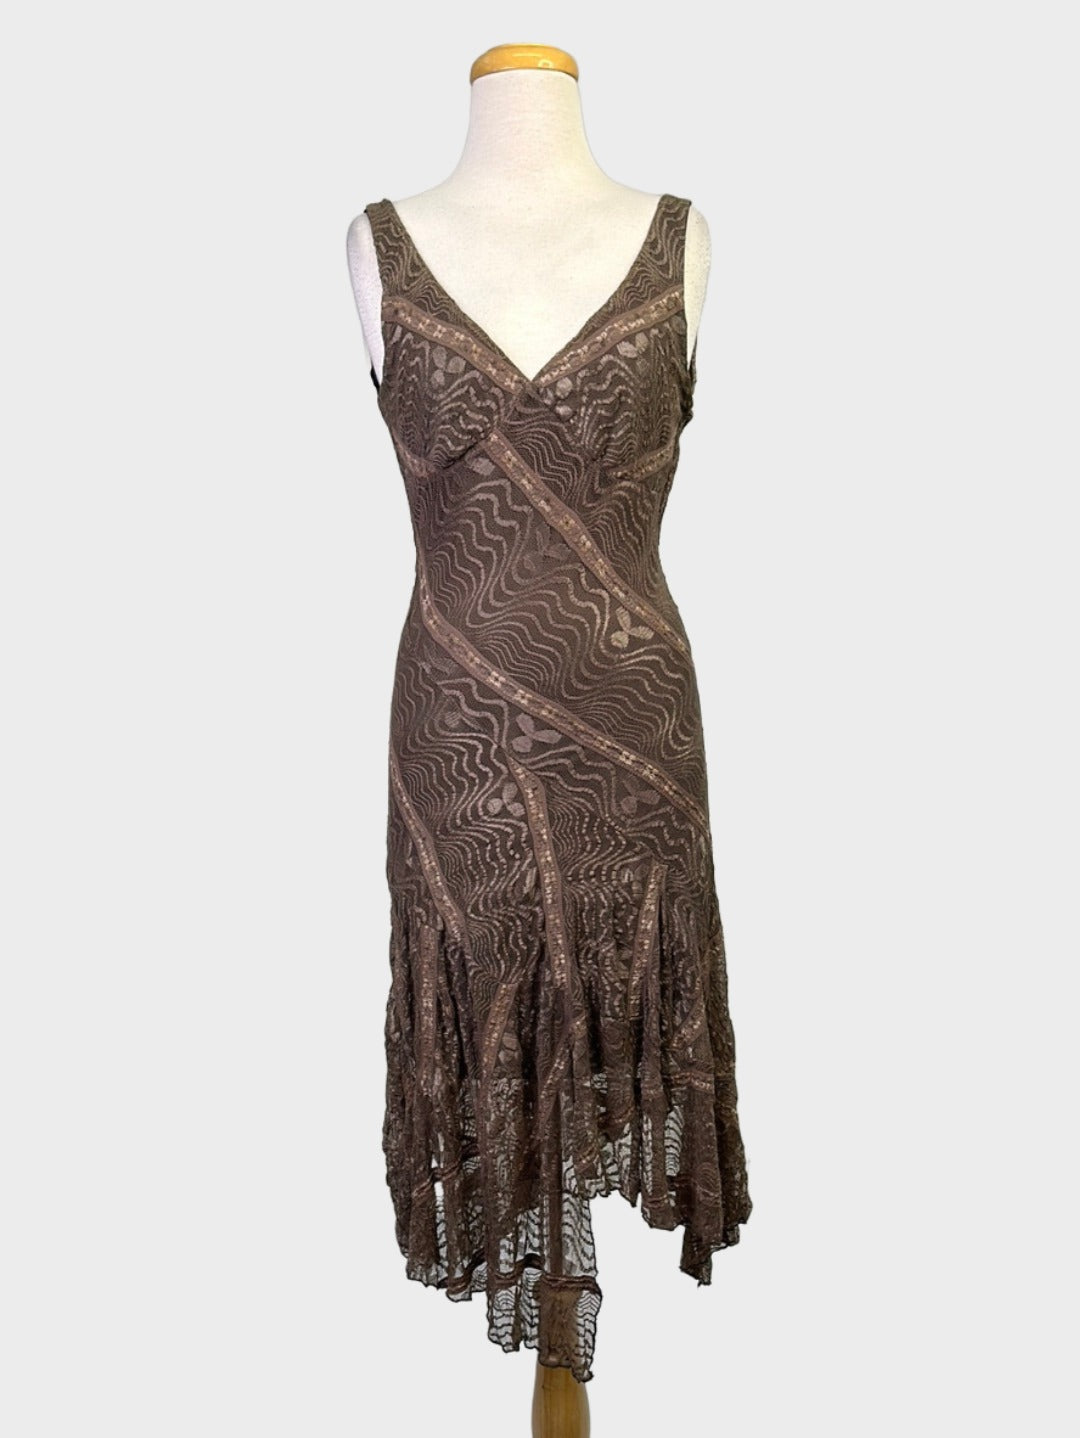 Cooper St | vintage 90's | dress | size 8 | midi length | made in Australia